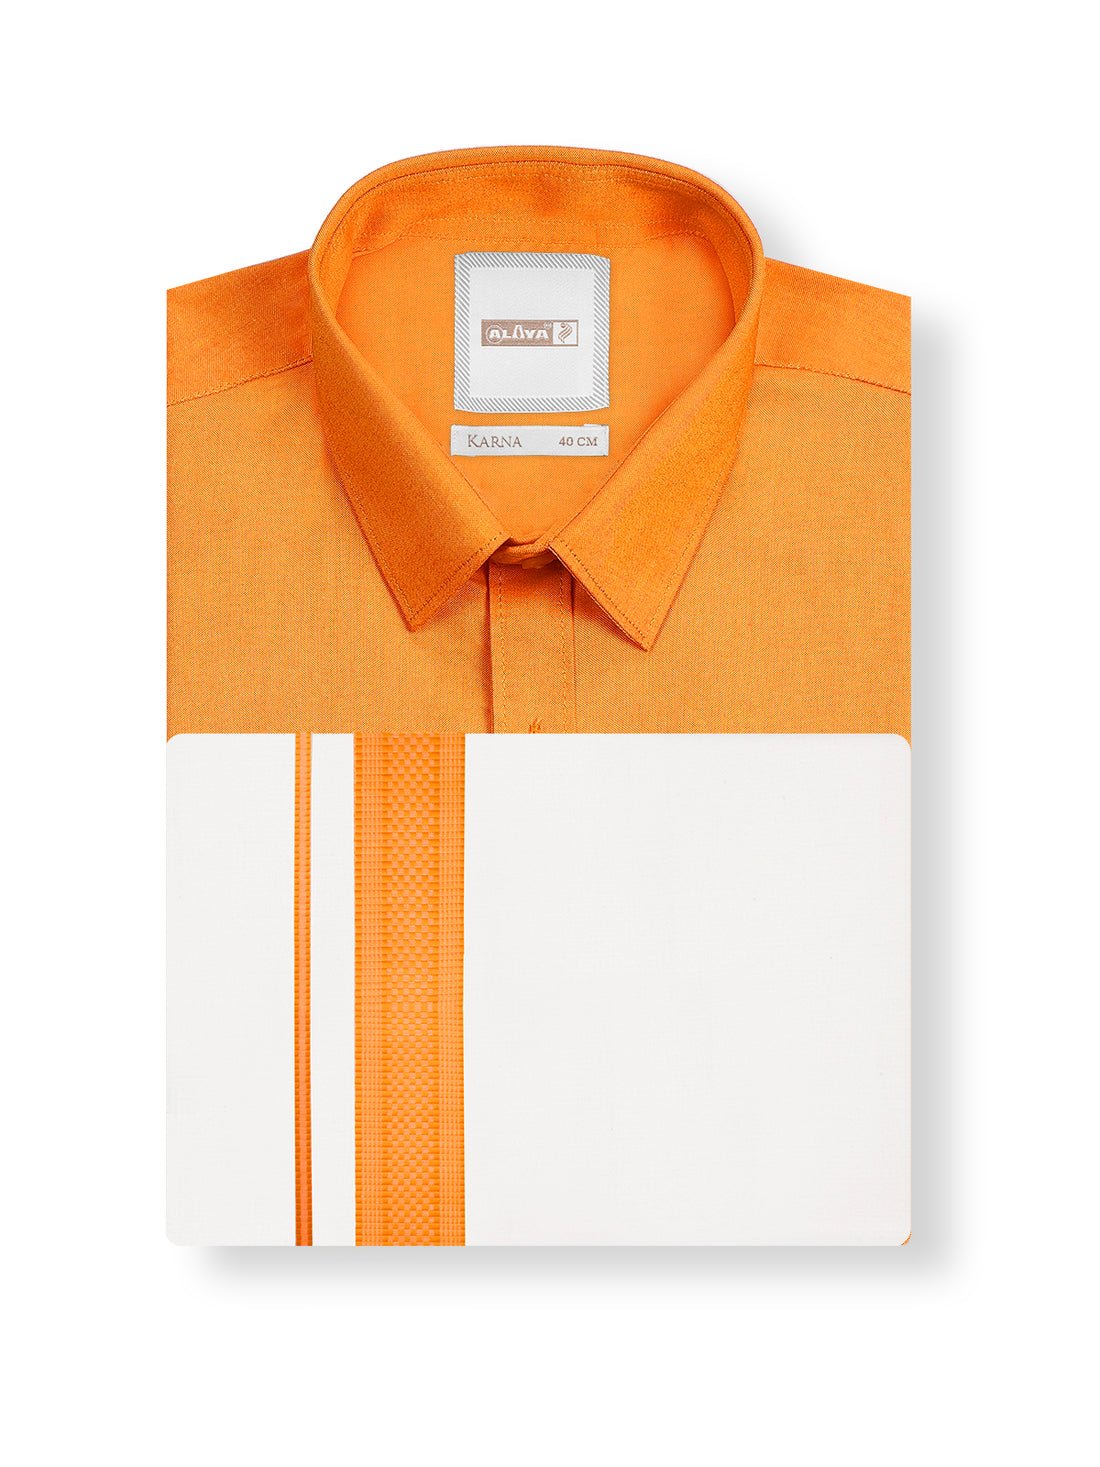 Karna Colour Shirt & Fancy Border Dhoti - Orange